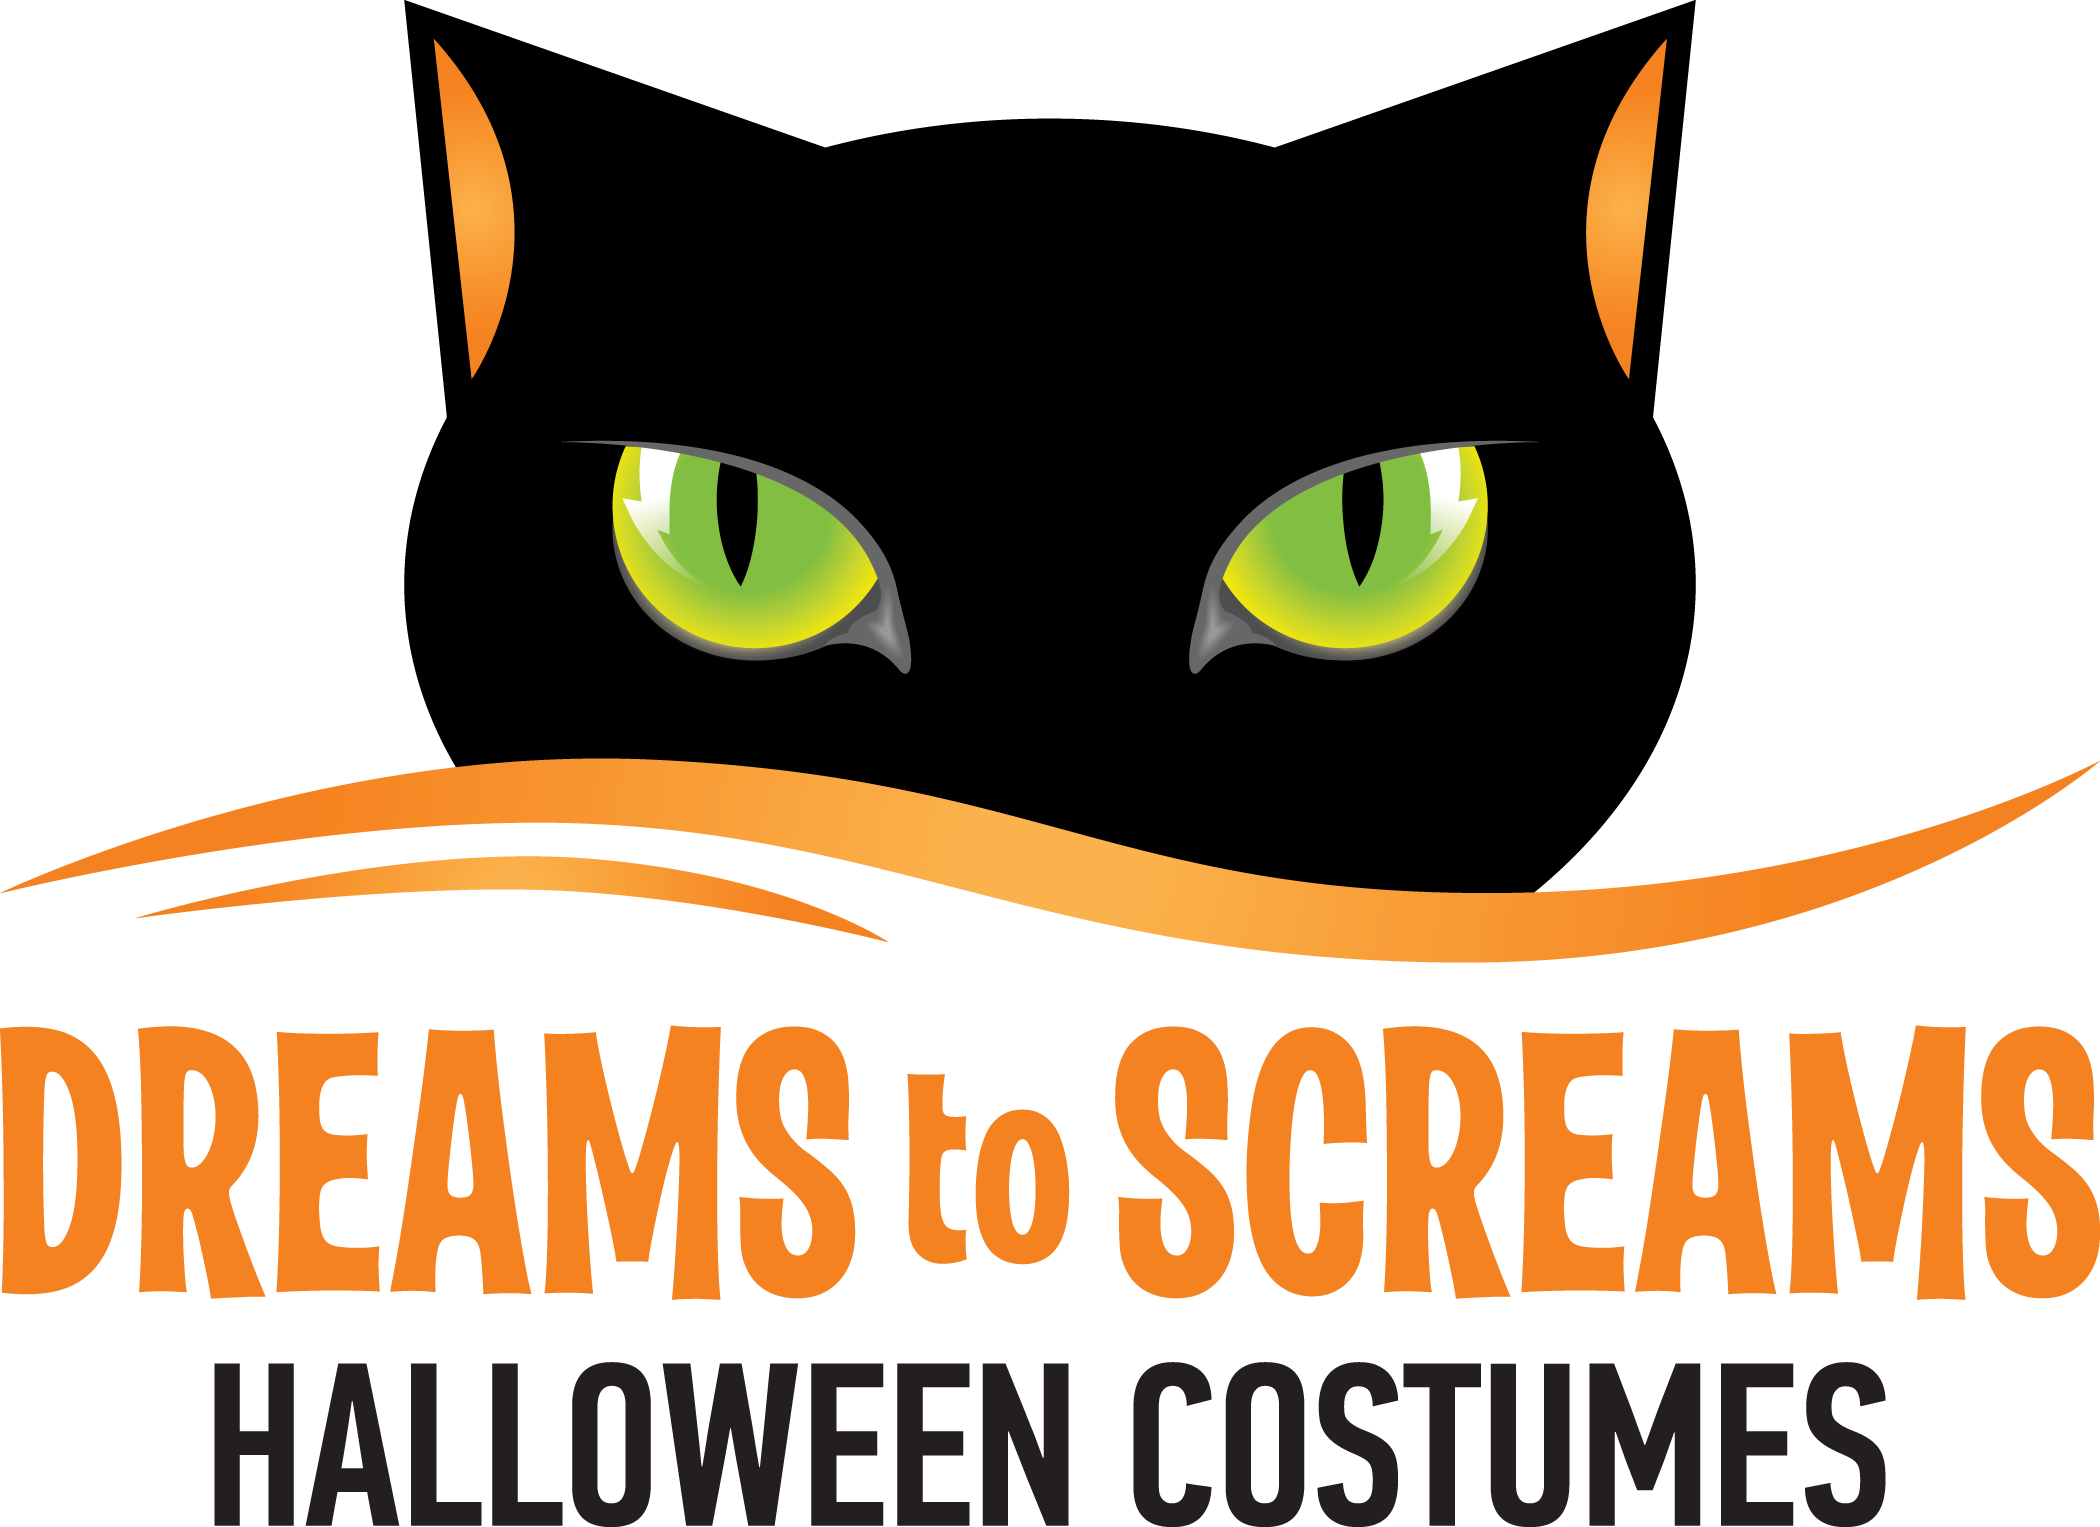 Halloween Dreams To Screams Costume Store - Costume (2100x1527)